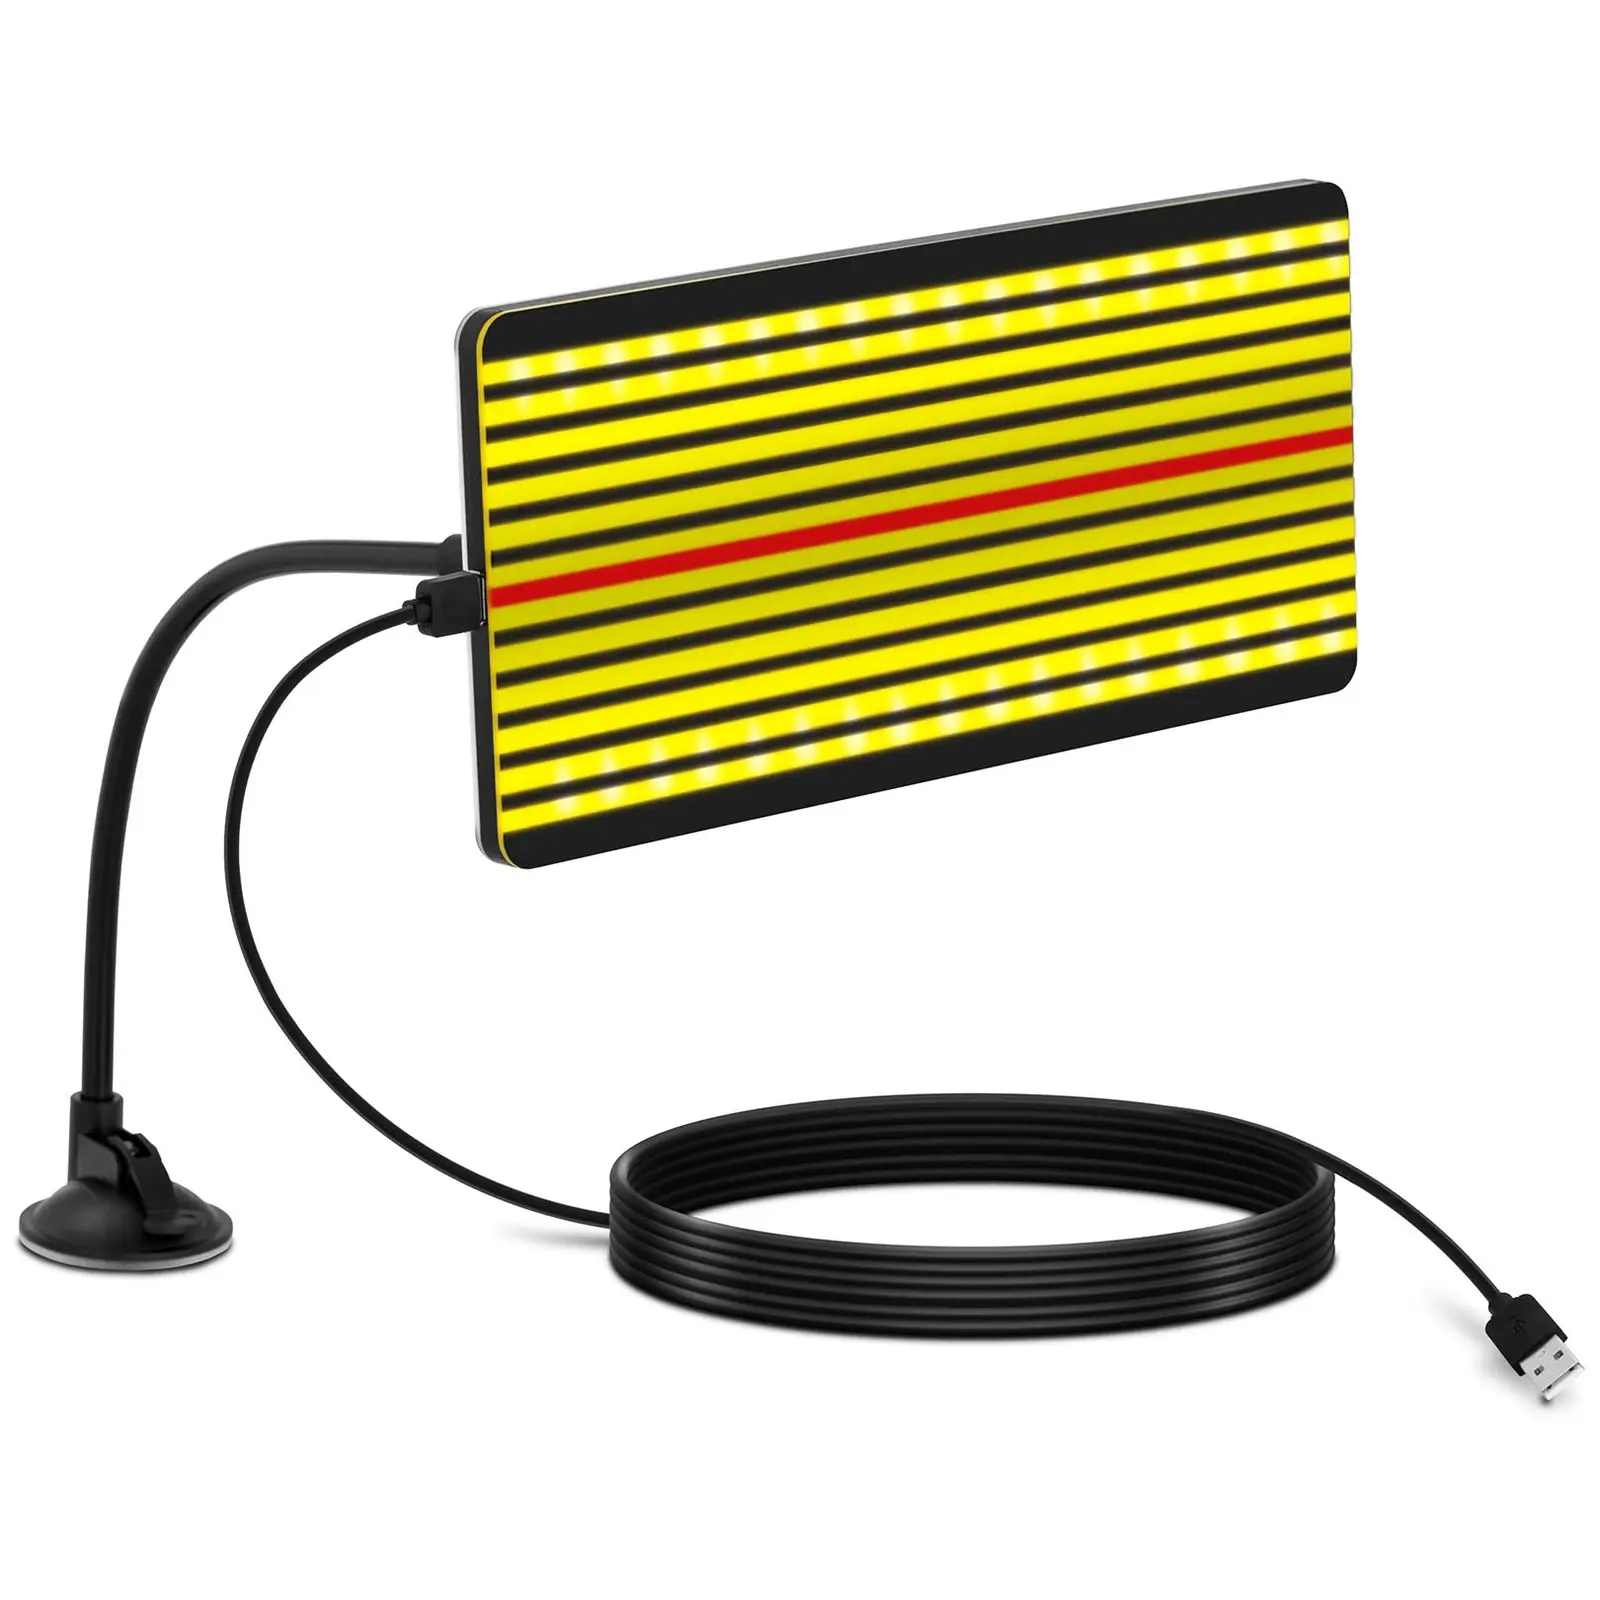 LED lampa pre PDR opravy - 32 x 15 cm - flexibilné rameno